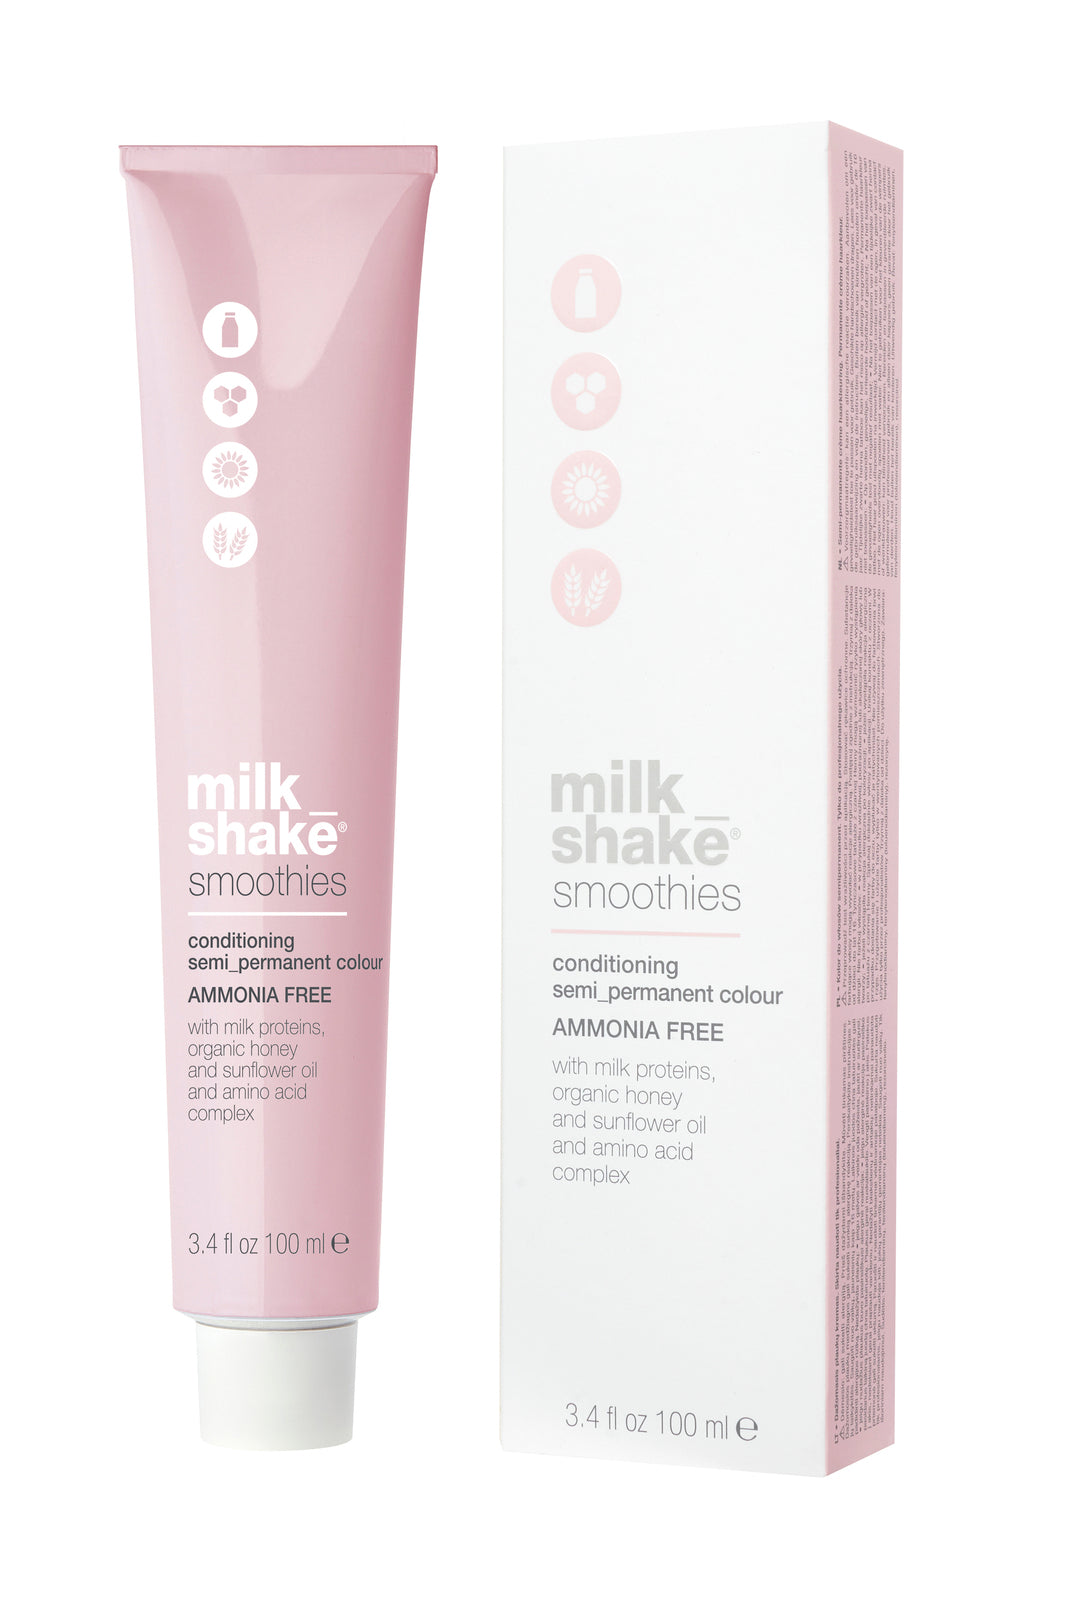 Milkshake smoothies semi-permanent color 5.16